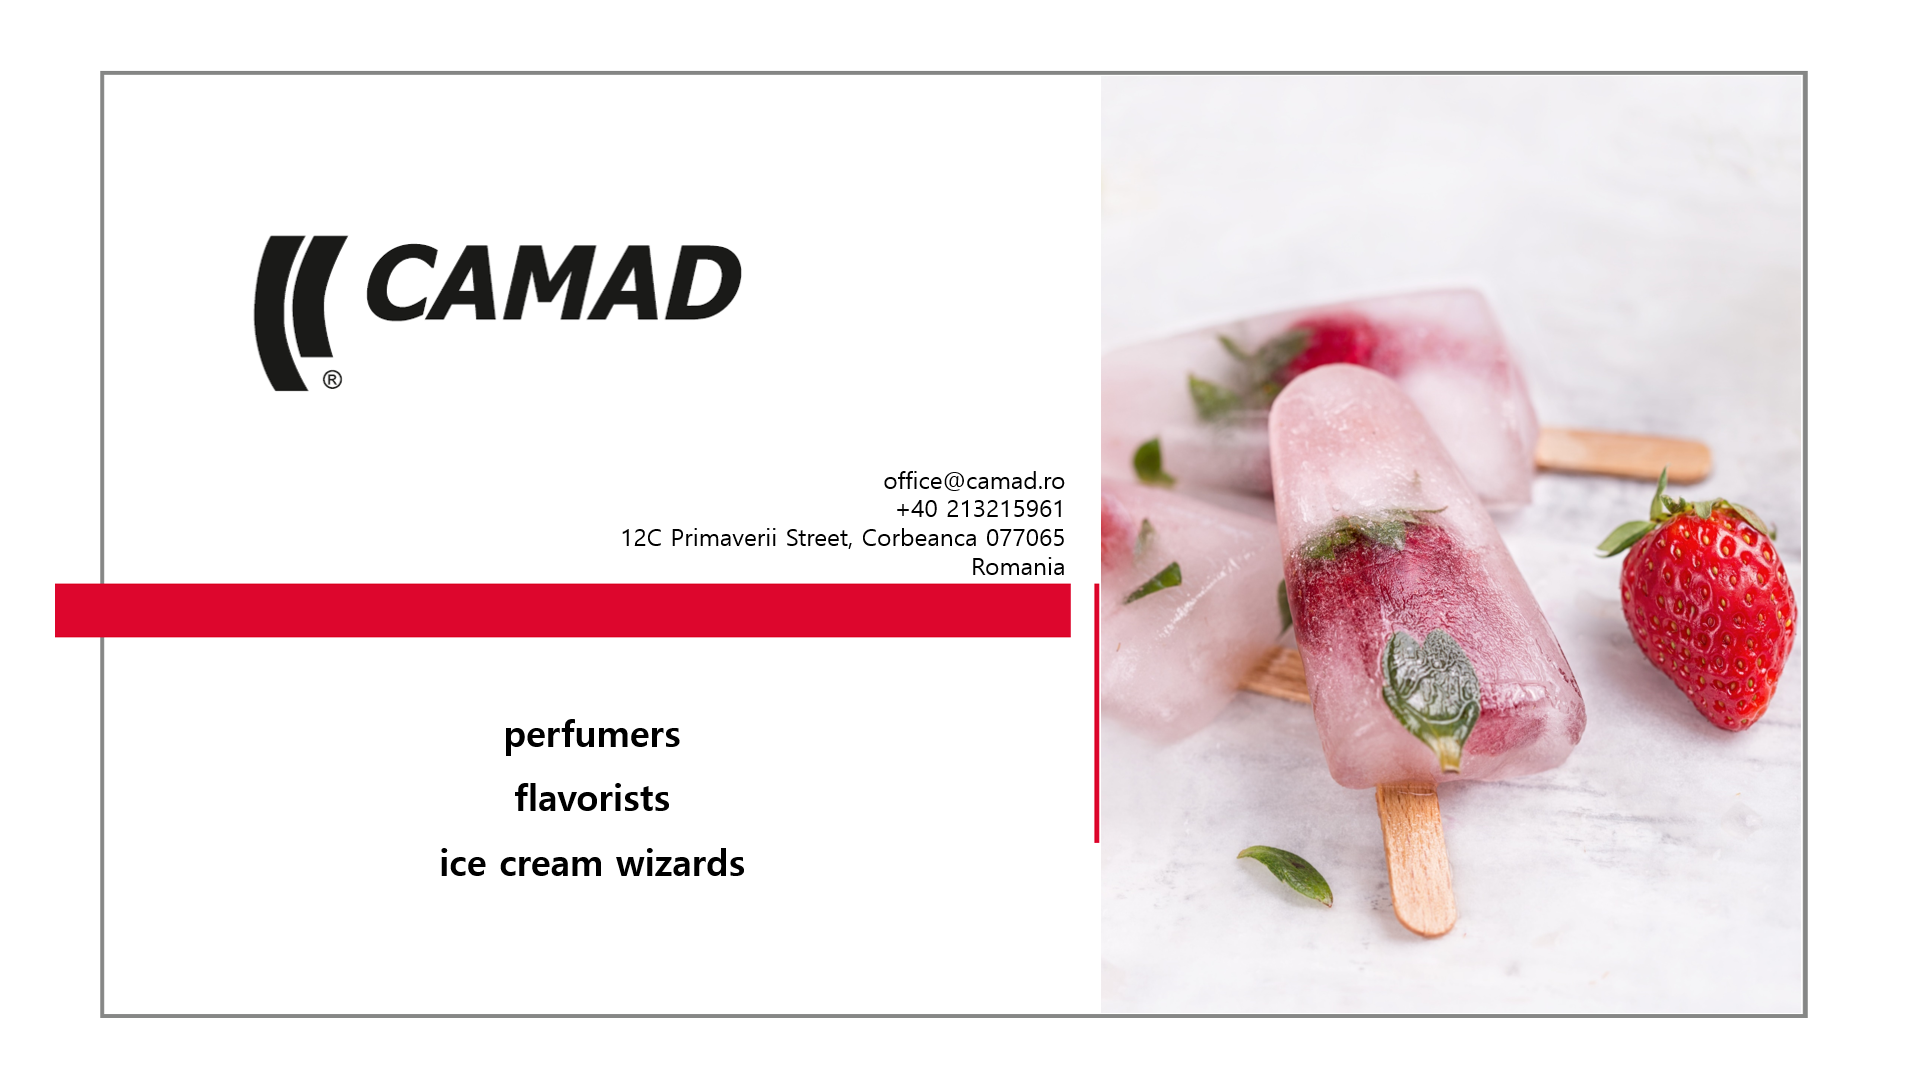 Camad Flavors - +40 21 321 59 61